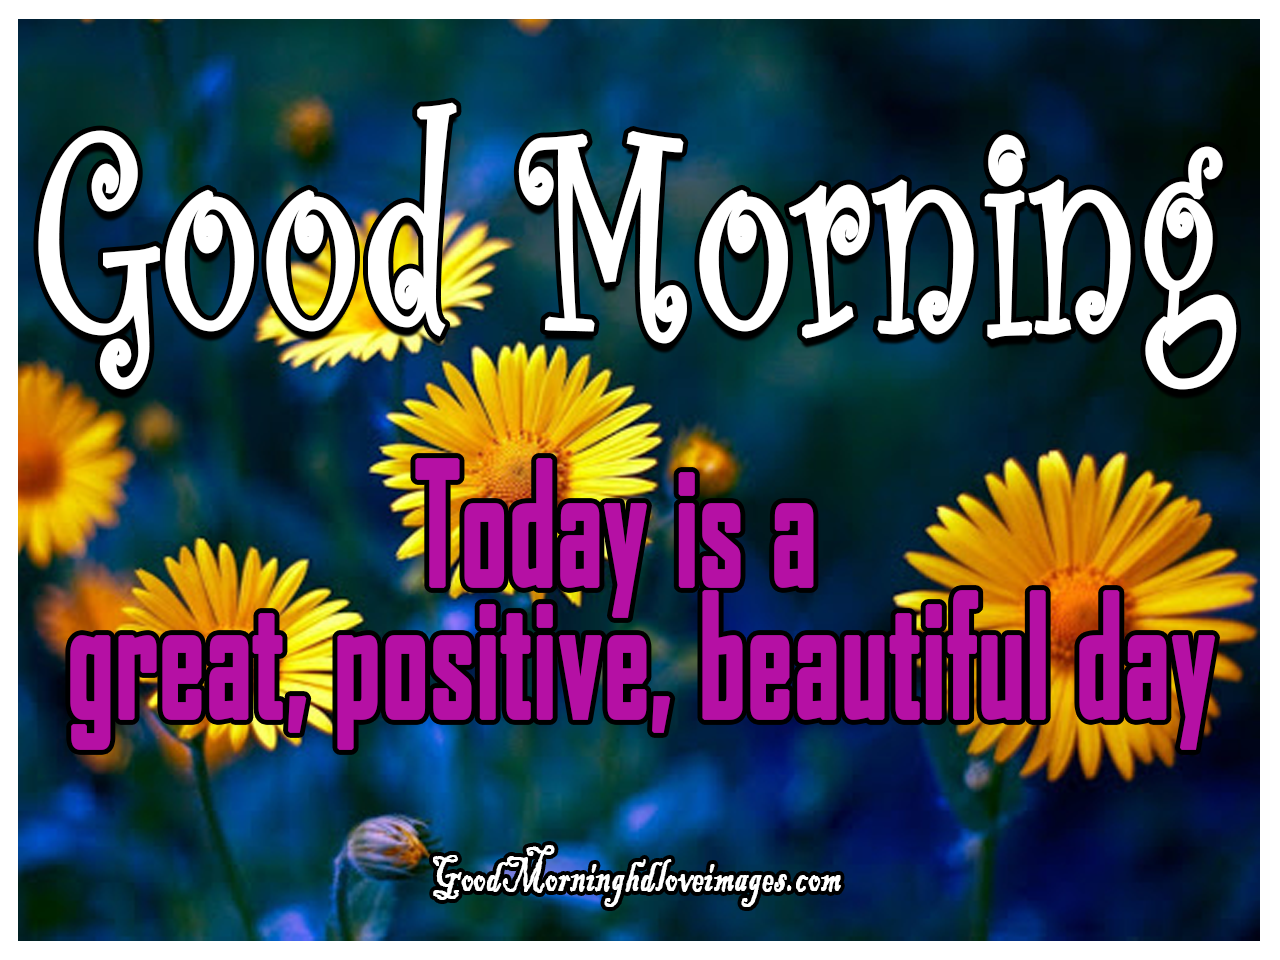 GD Mrng Wallpaper - Good Morning Wallpaper Free Download - Good Morning